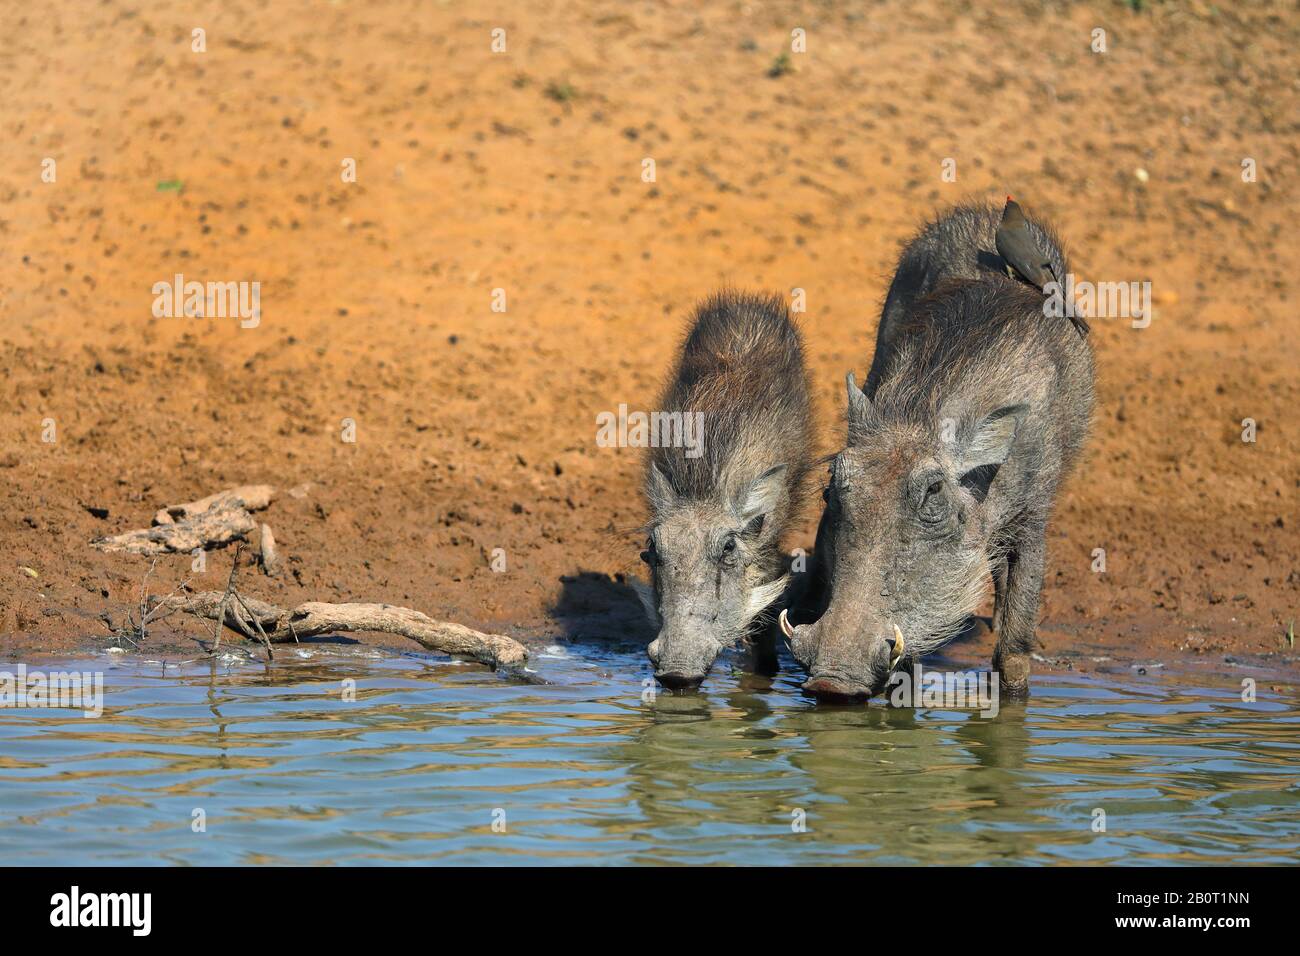 Warthog comune, savana warthog (Phacochoerus africanus), madre e bambino che bevono insieme in un luogo d'acqua, osspecker rosso-fatturato che foraging su un warthog, Sudafrica, KwaZulu-Natal, Mkhuze Game Reserve Foto Stock